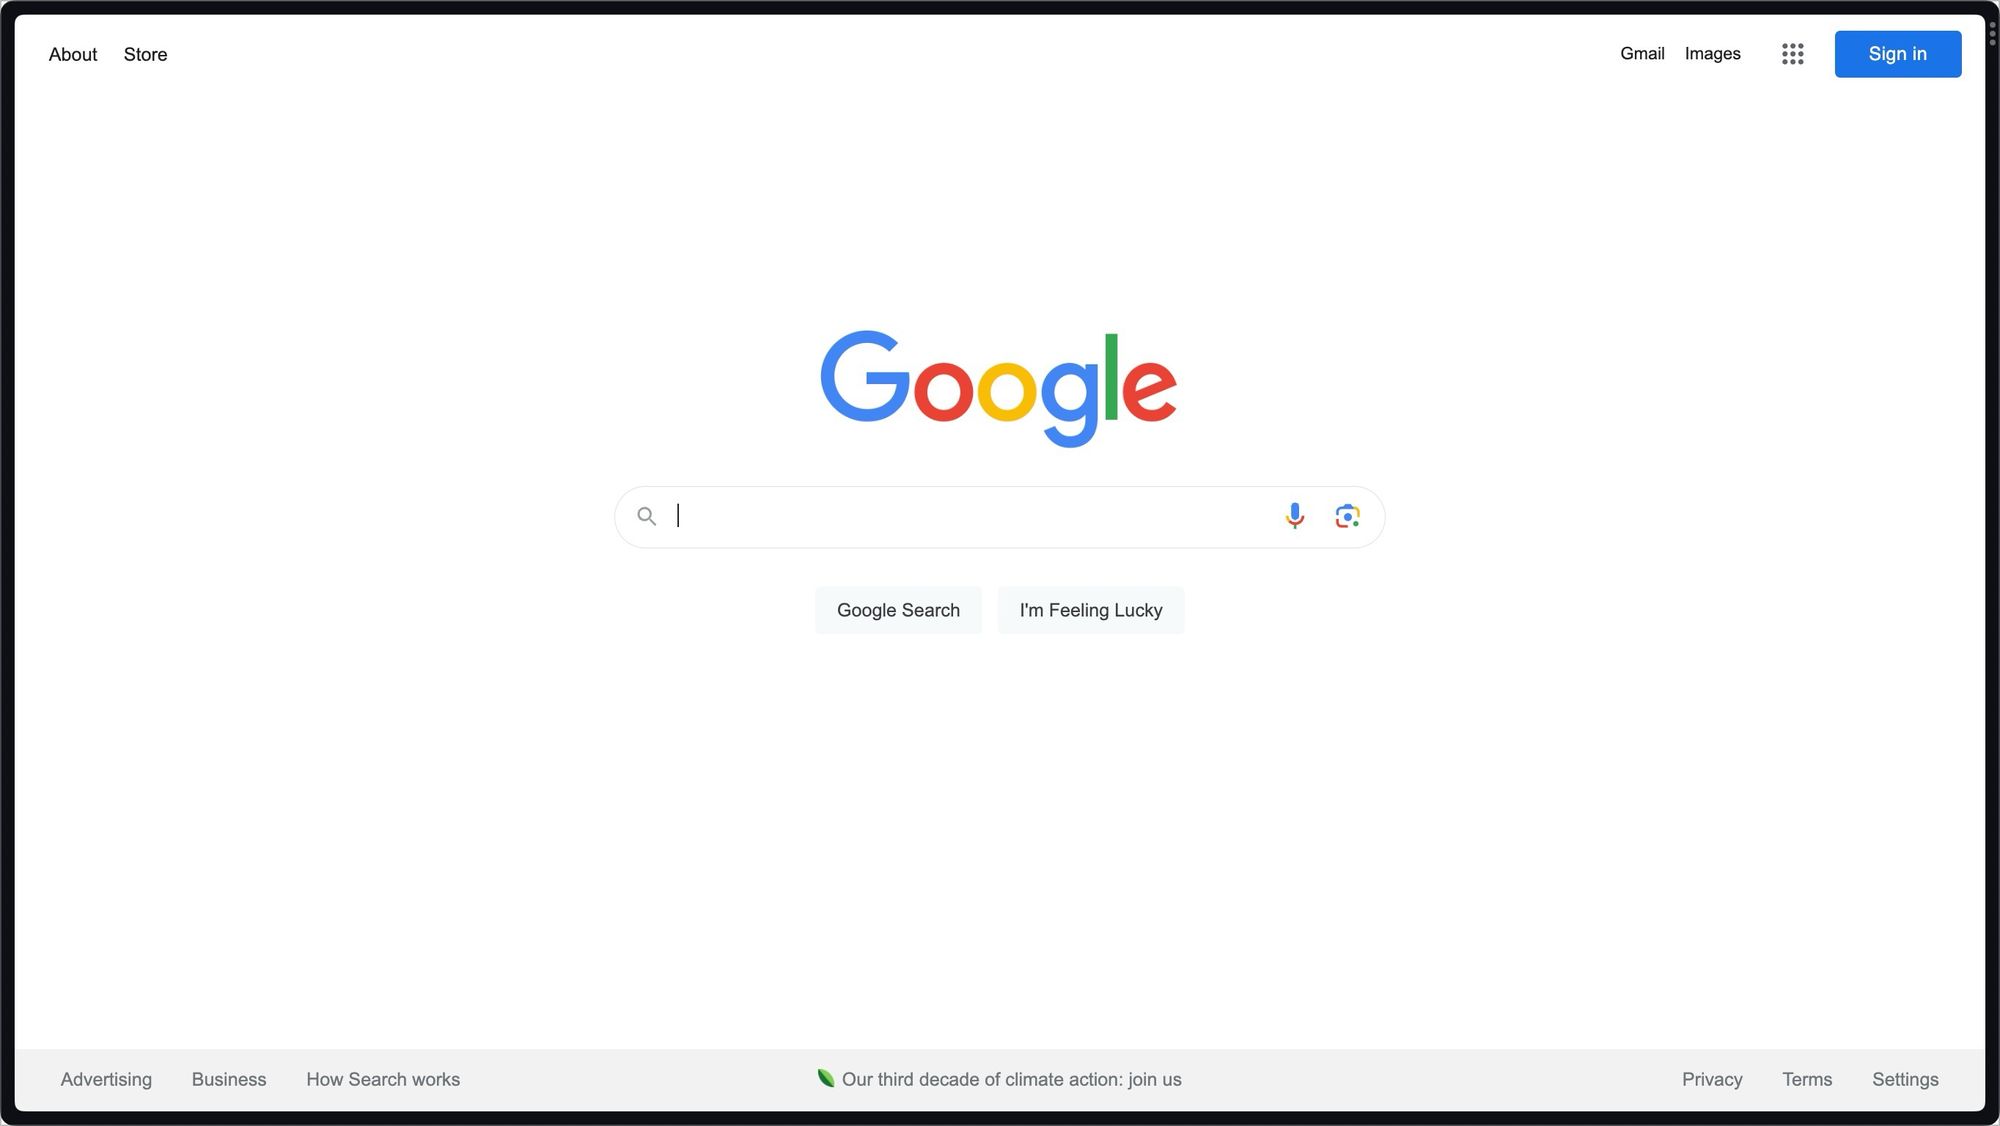 Google homepage screenshot